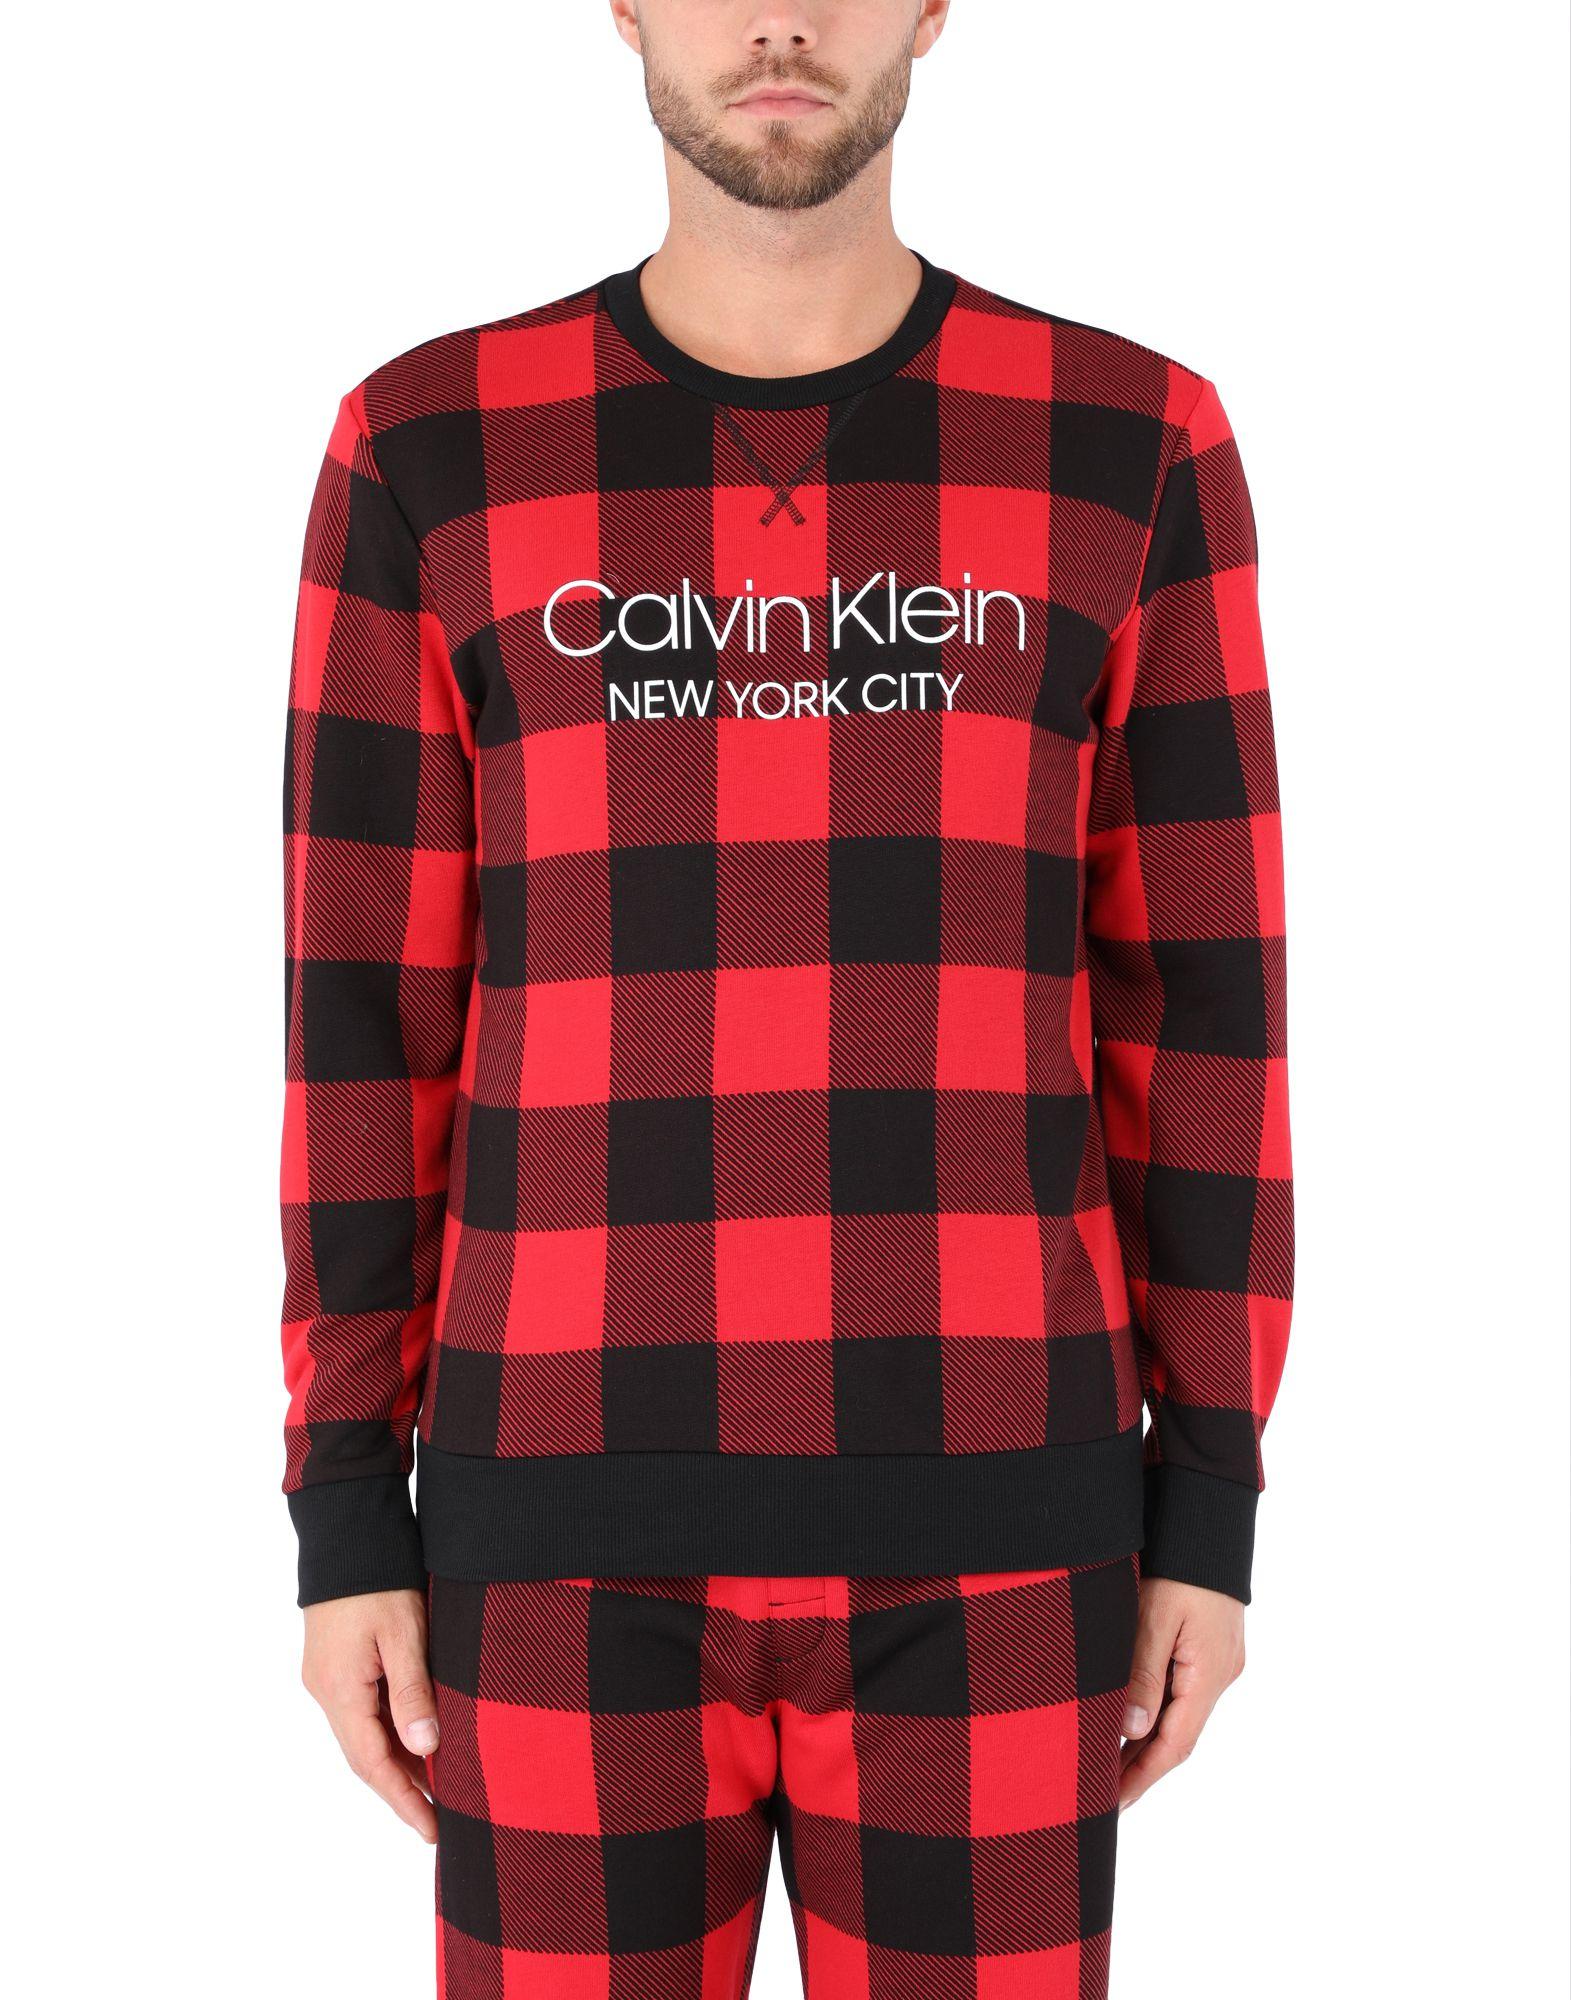 Calvin Klein Modern Cotton Buffalo Check Sweatshirt in Red/Black (Red) for  Men - Lyst